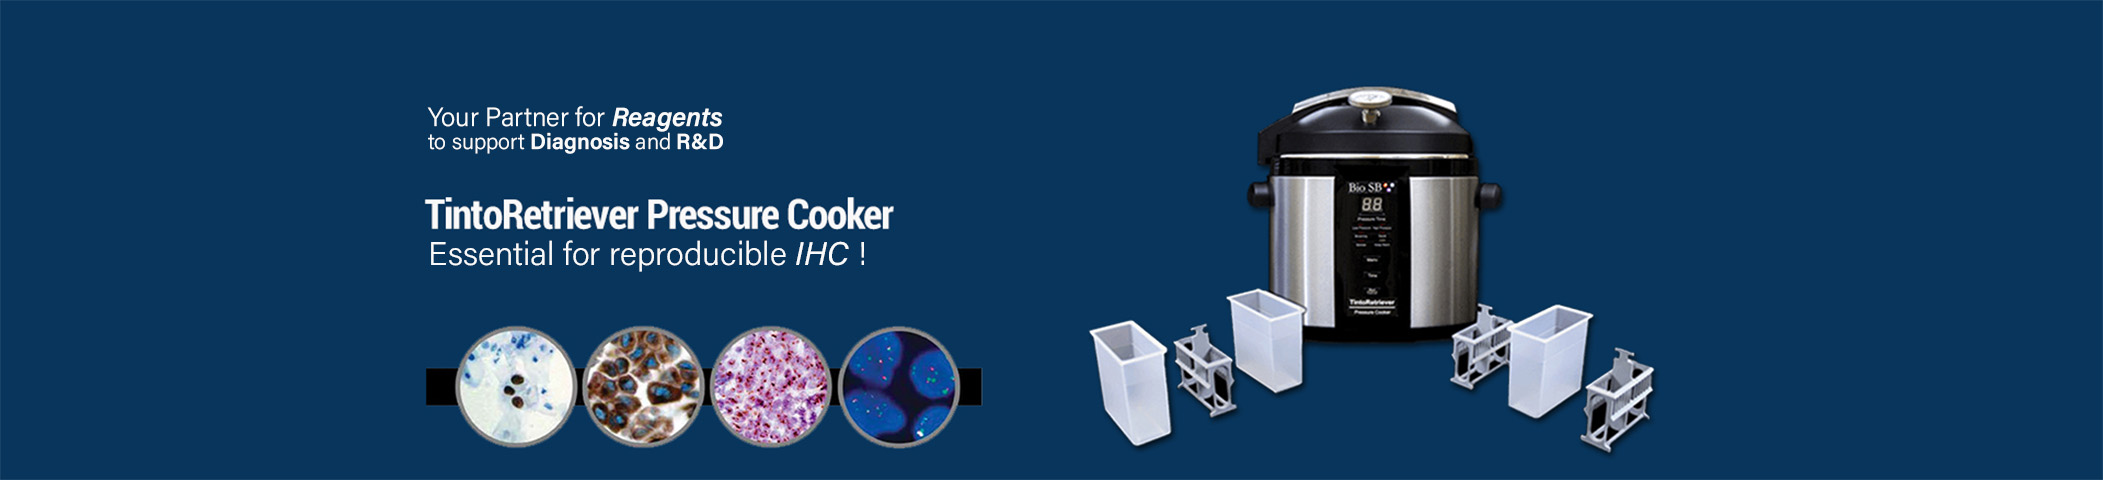 tintoretriver-pressure-cooker